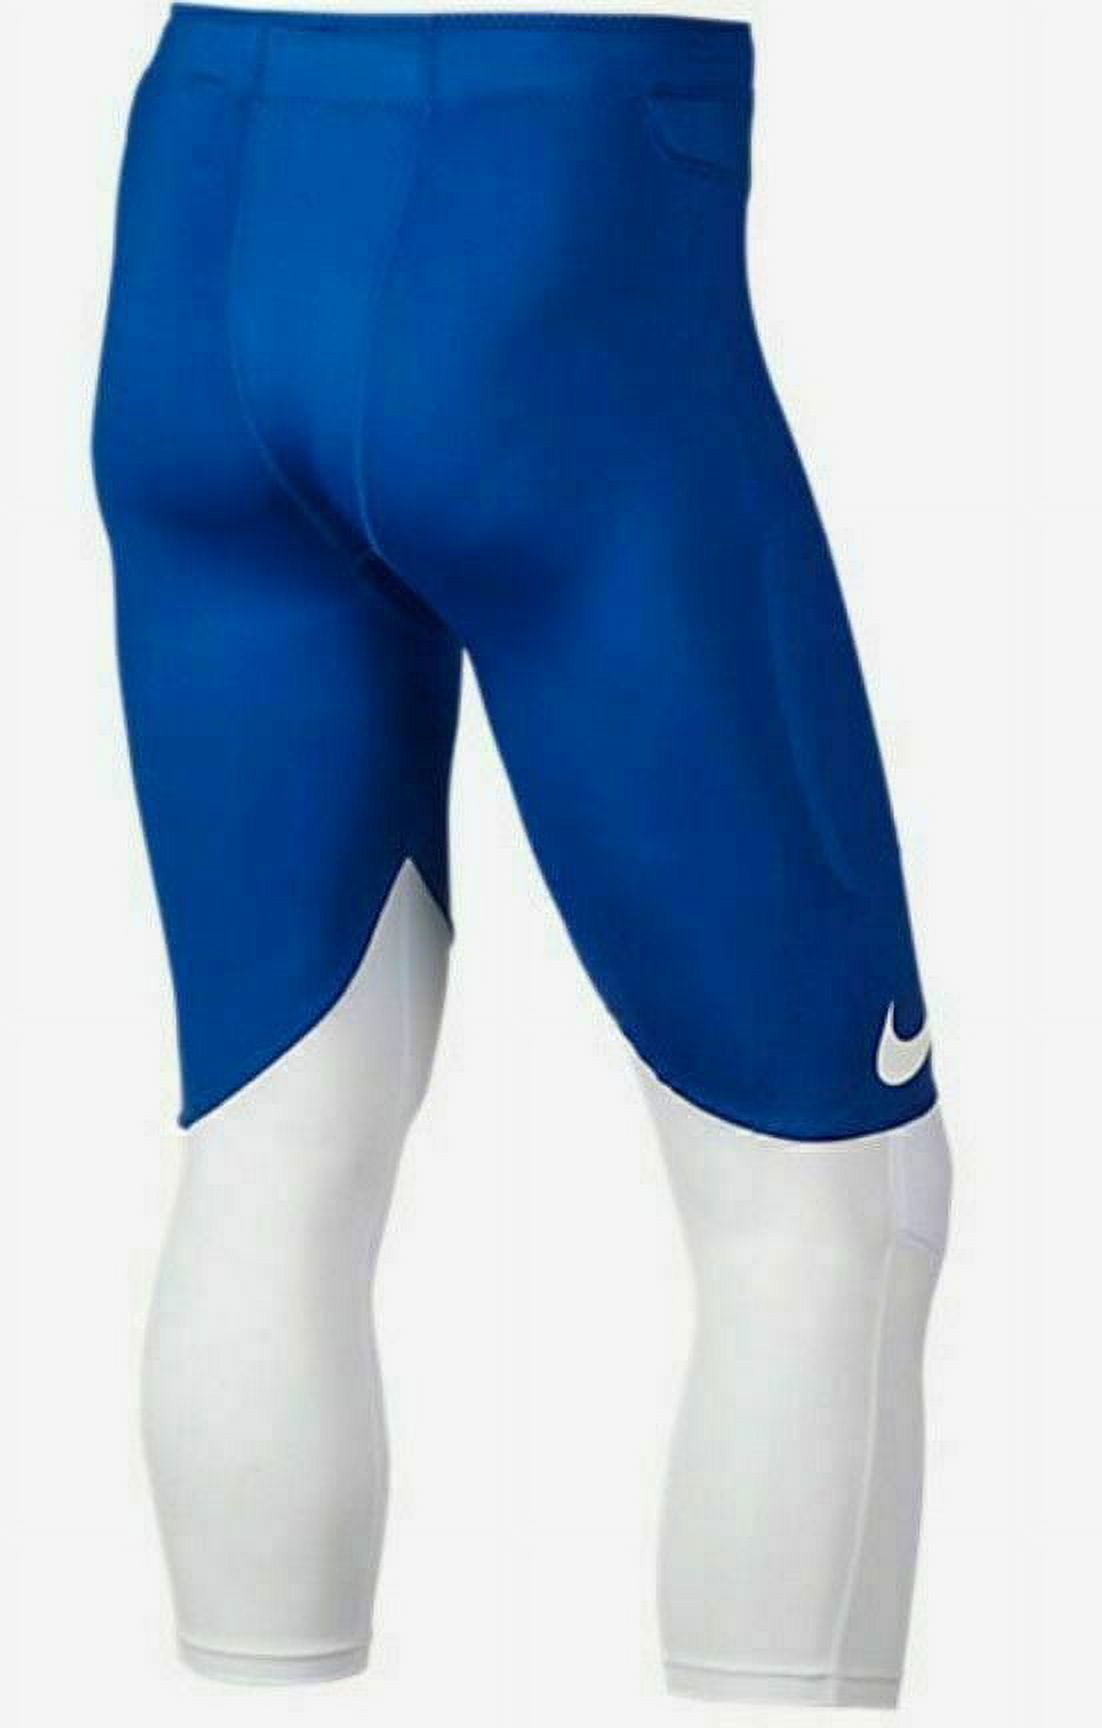 NEW Nike Vapor Speed Men's 3/4 Football Tights 835340-480 Blue 2XL $70 MSRP  XXL 